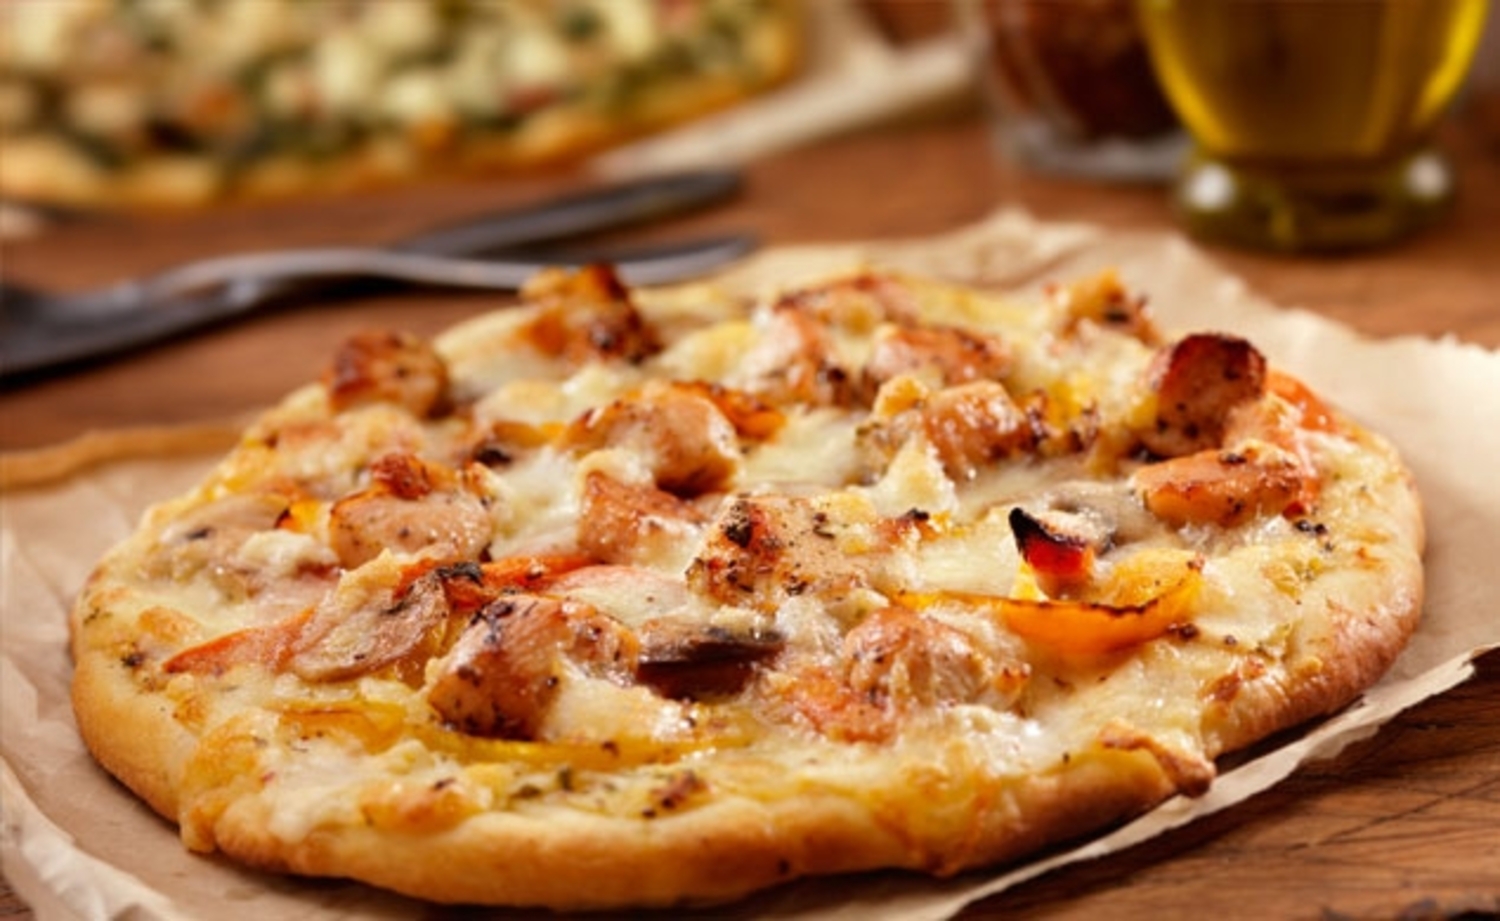 Chicken parmigiana pizza is now available at Hampton Eats. COURTESY HAMPTON EATS